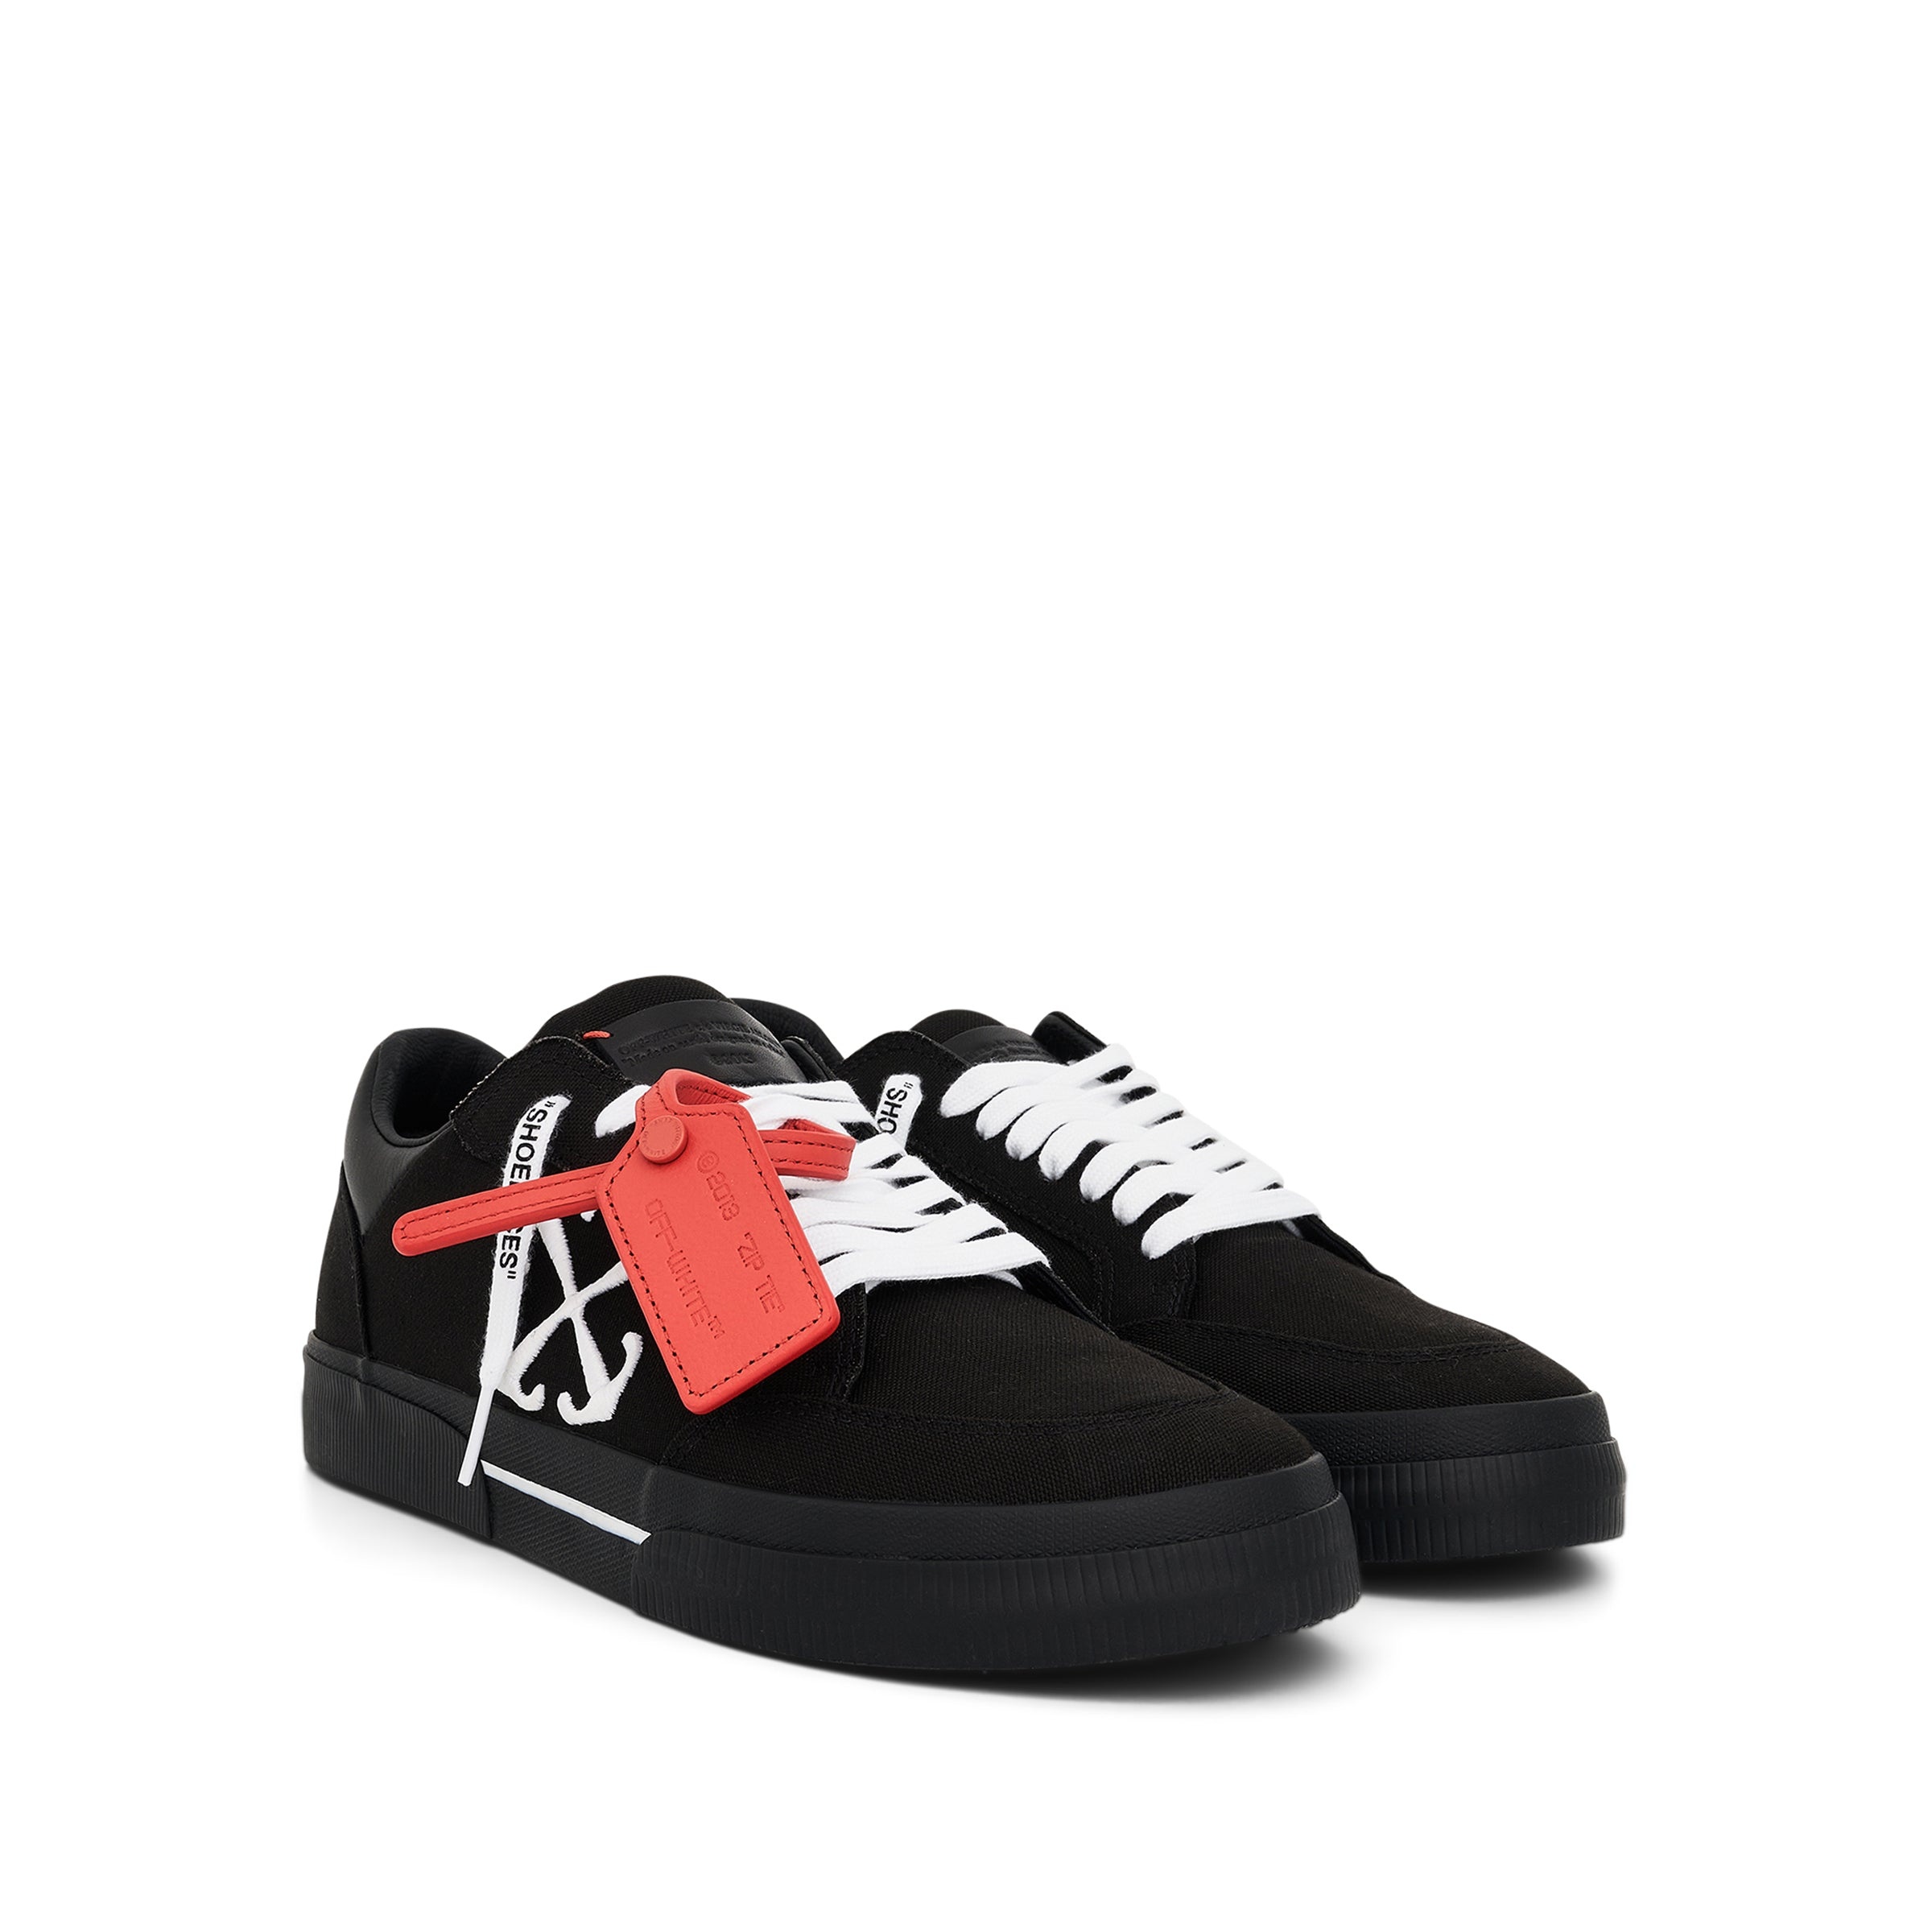 New Low Vulcanized Canvas Sneaker in Black/White - 2